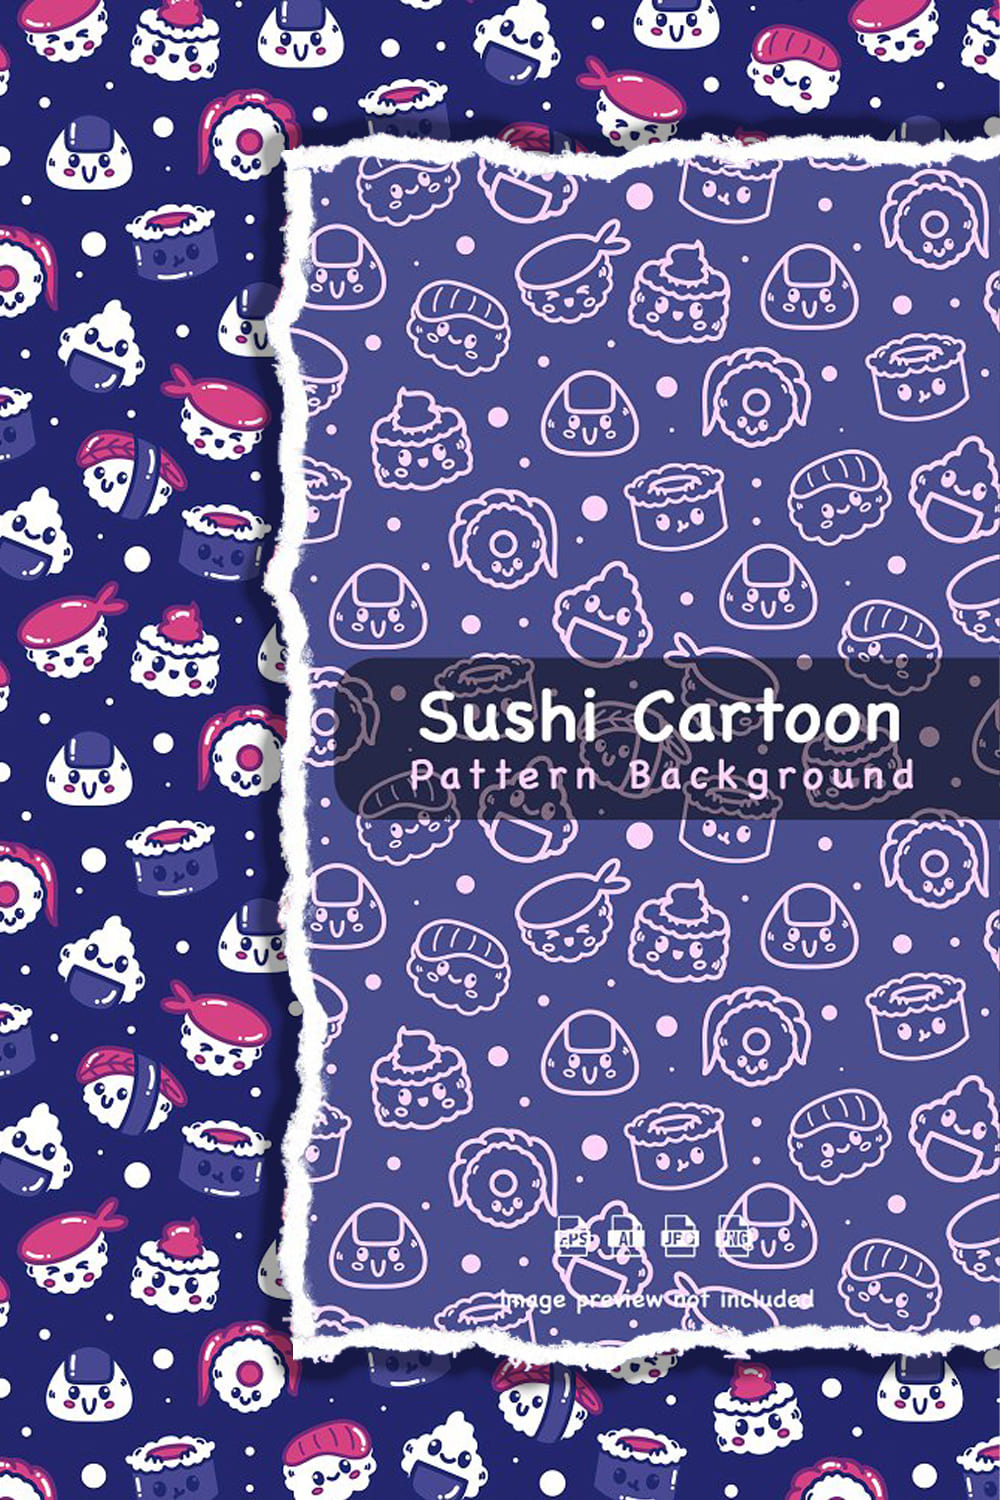 7252891 pattern background sushi cartoon pinterest 1000 1500